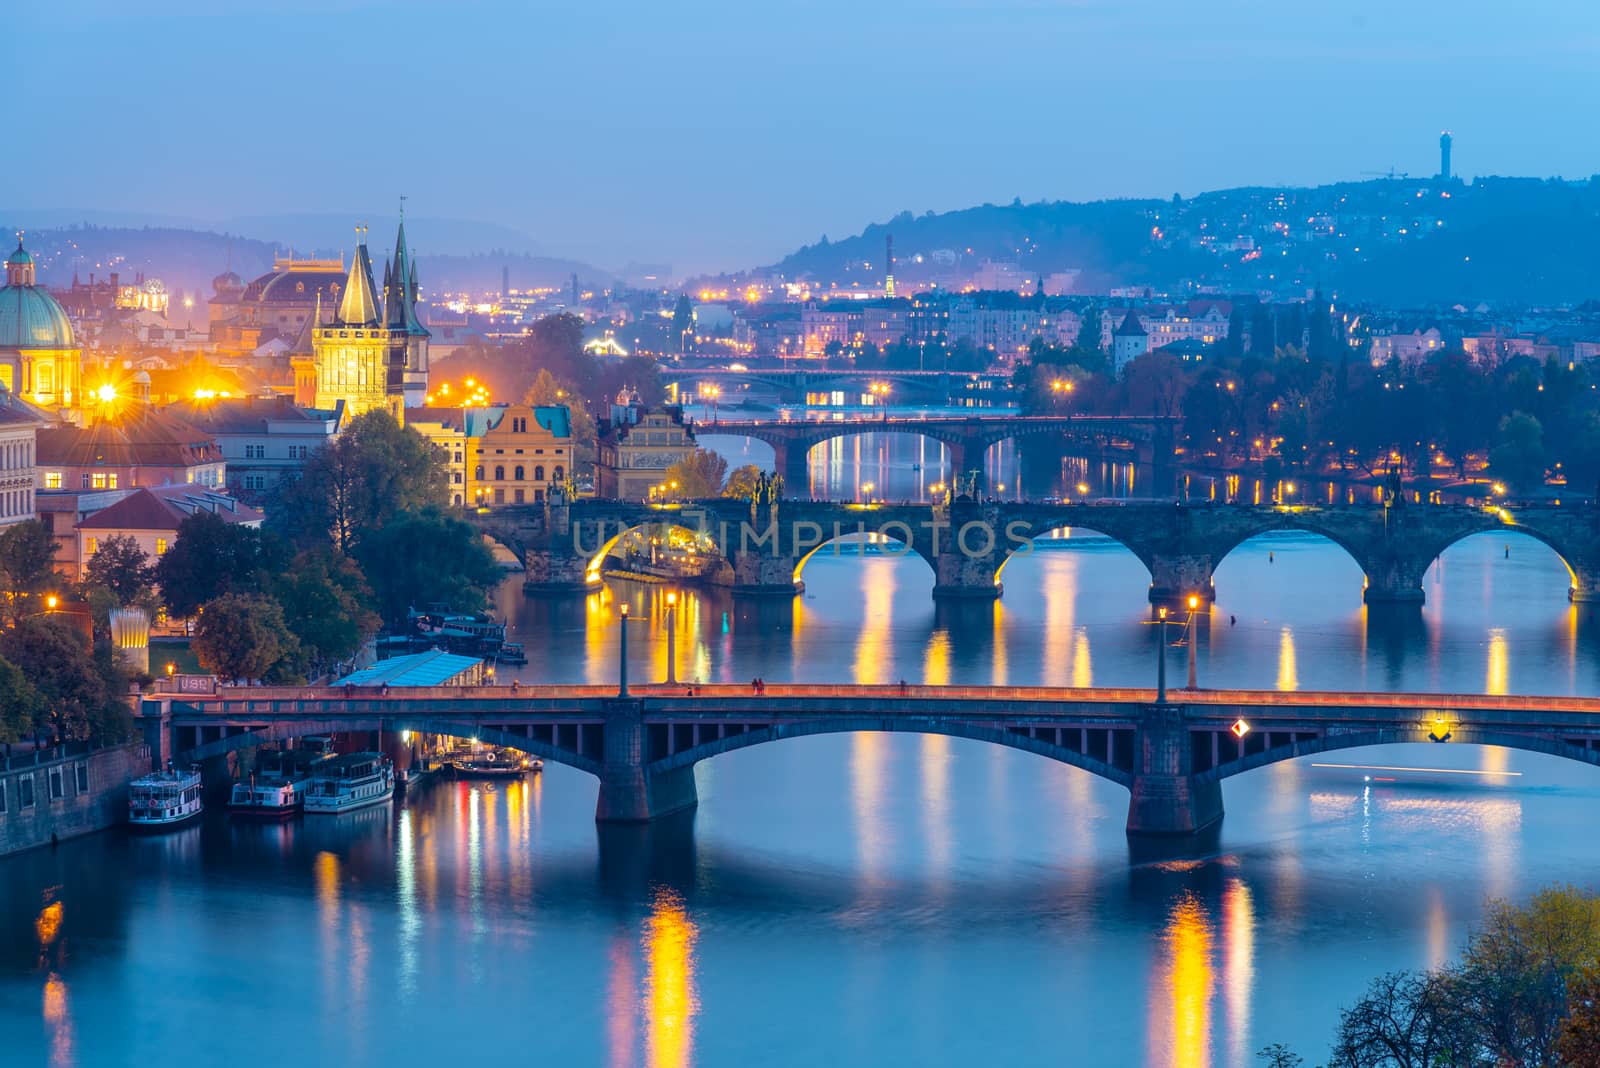 Prague bridges over Vltava River in the evening, Praha, Czech Republic by pyty